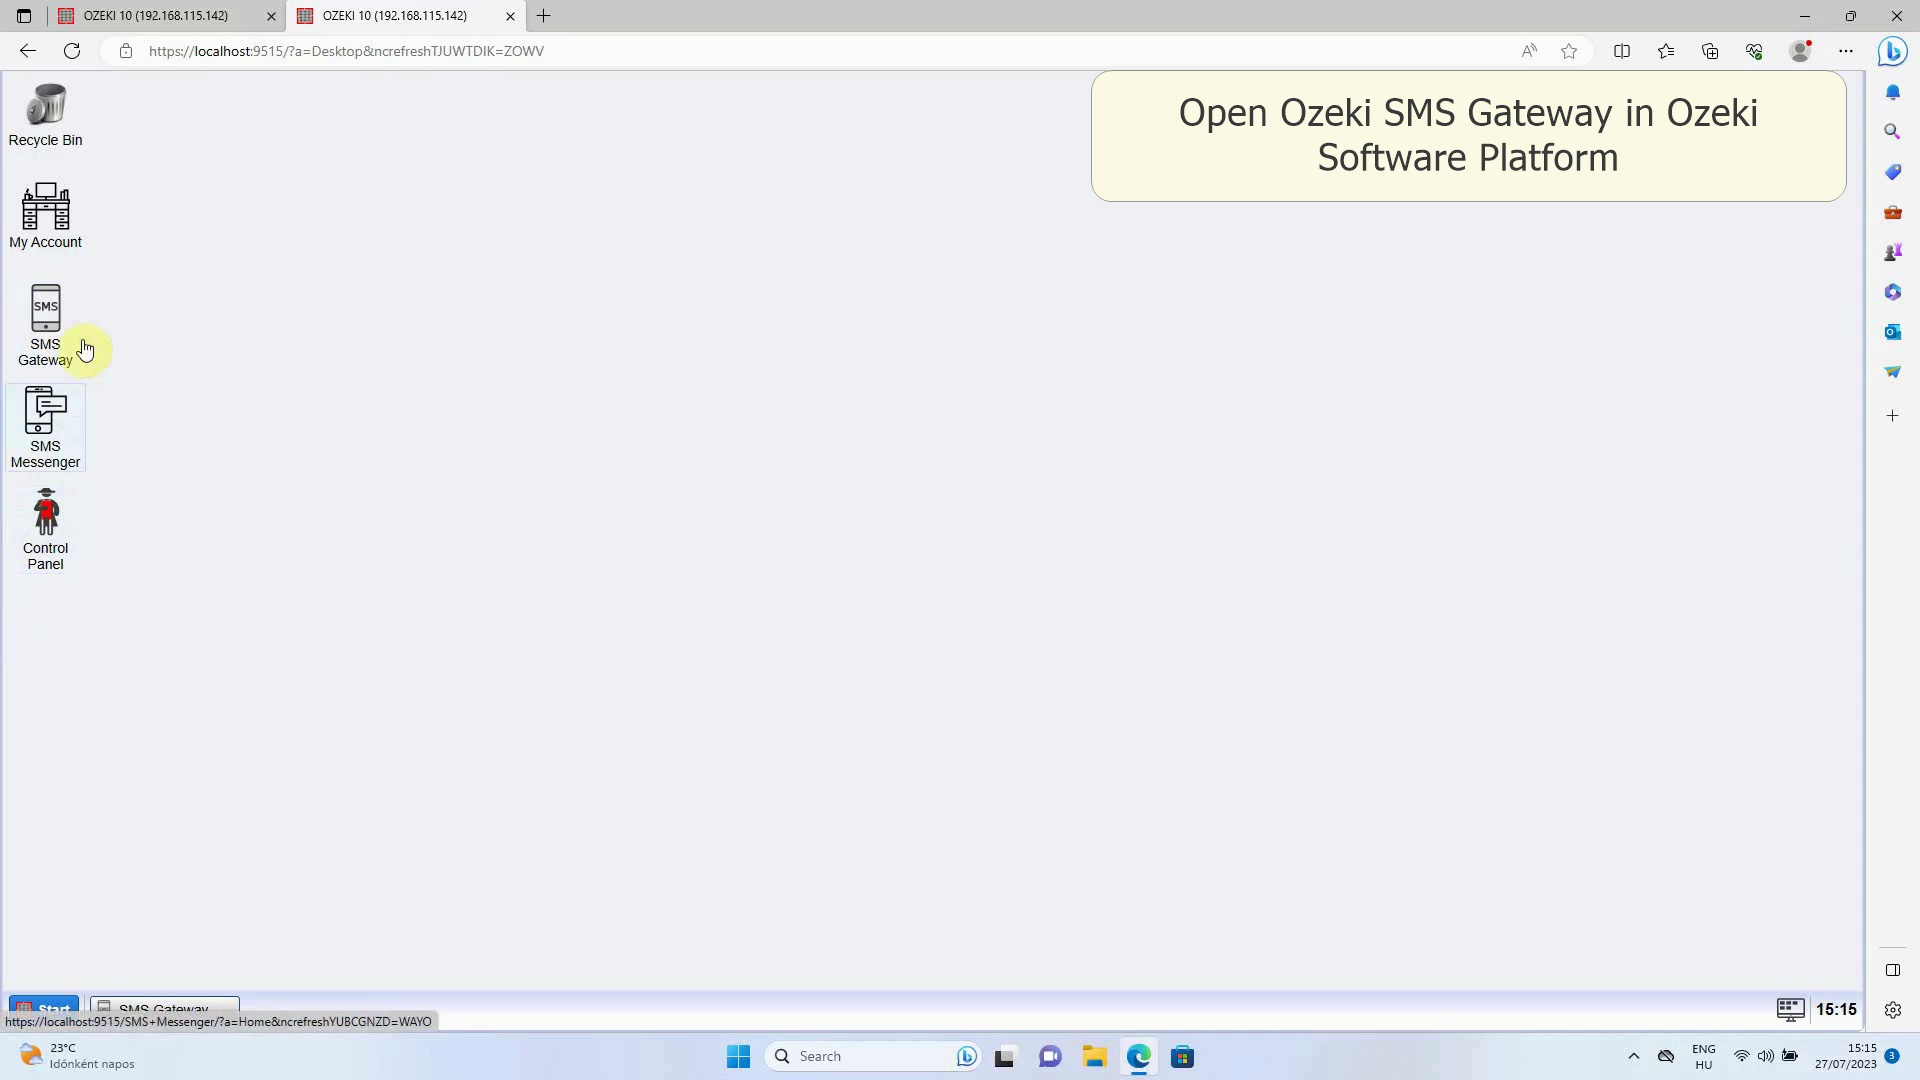 ozeki software platform showing sms gateway